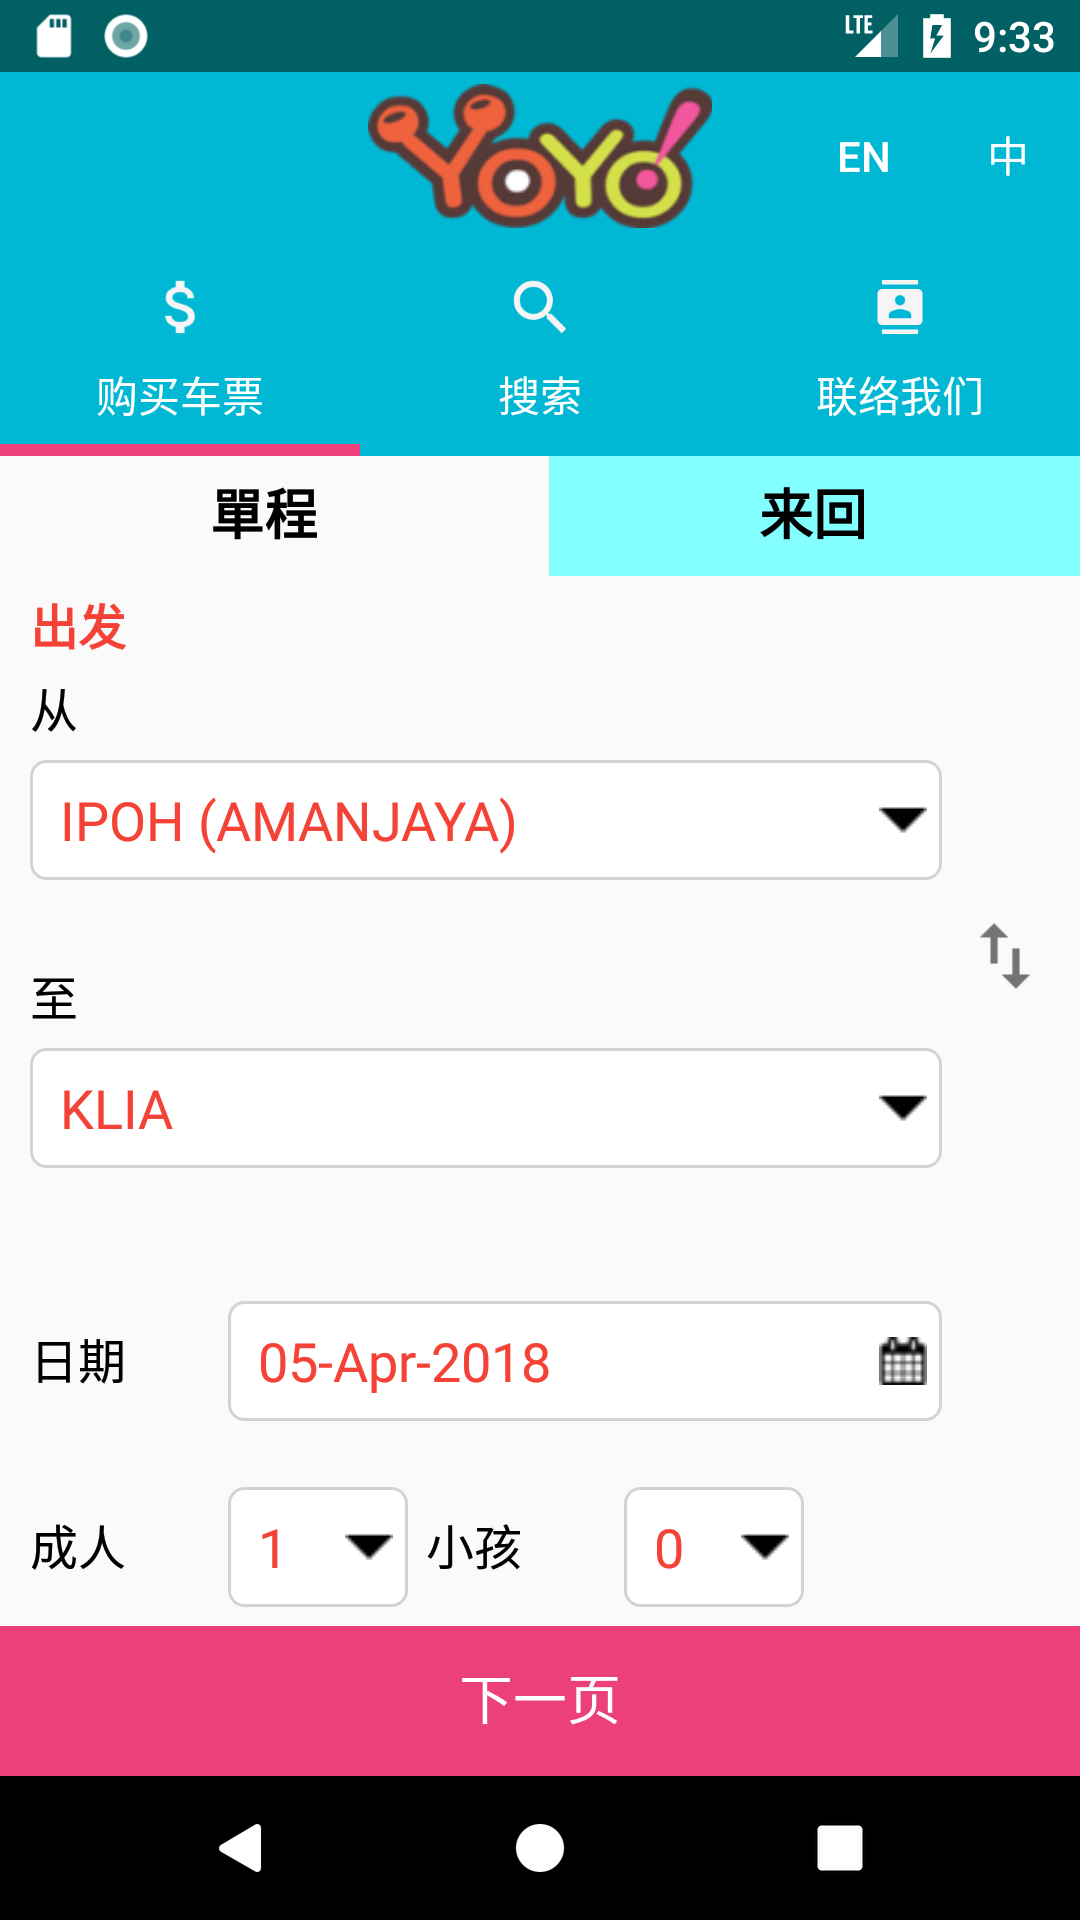 Yoyo Mobile App Chinese